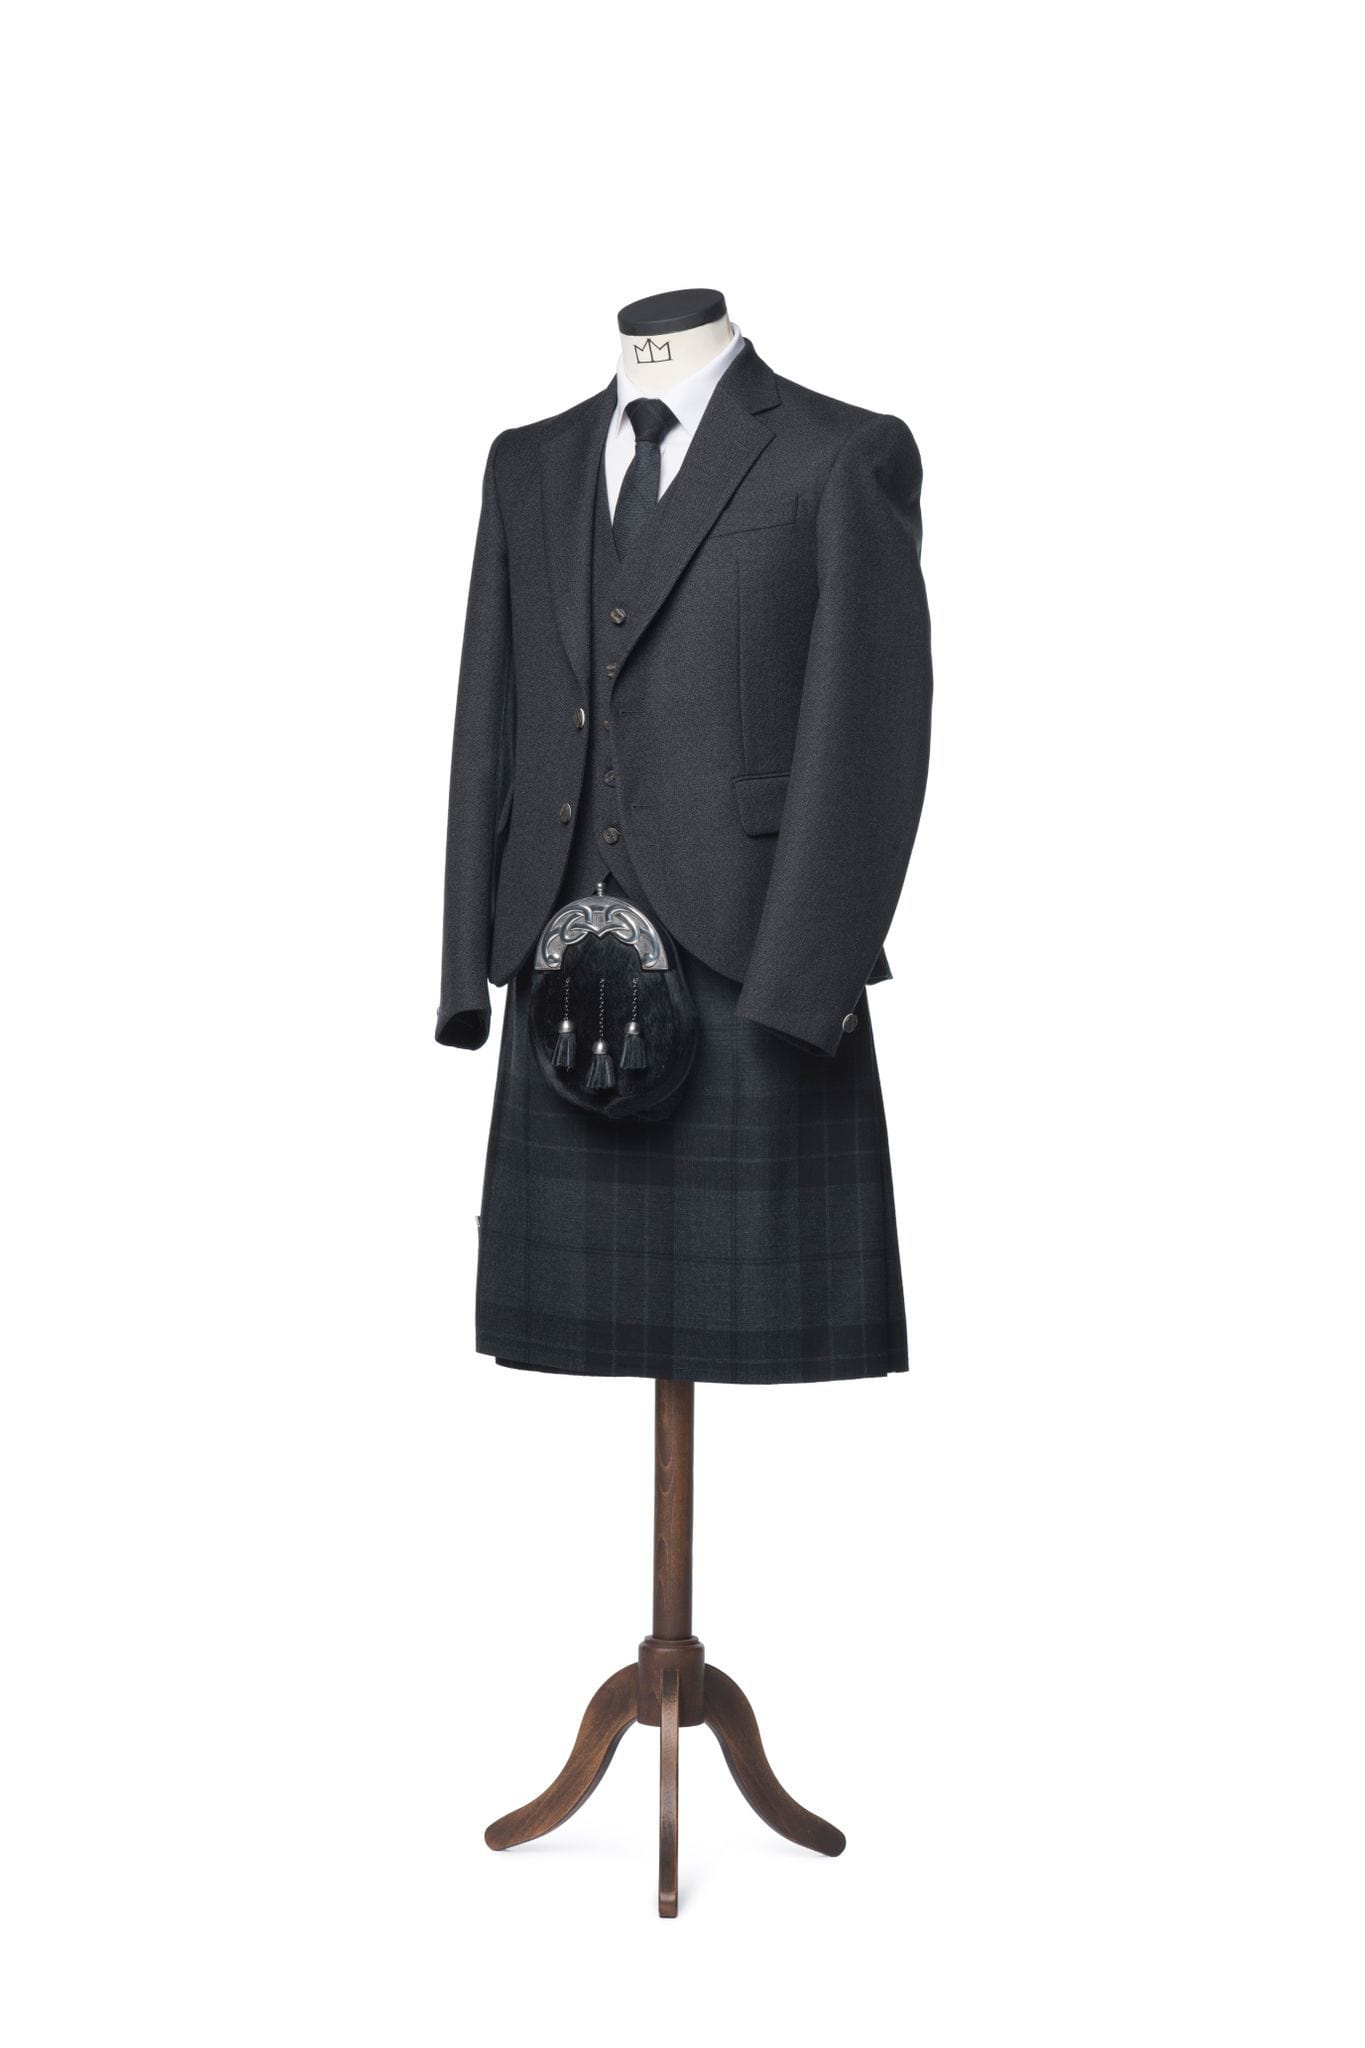 Glen Orchy Tweed Kilt Outfit - MacGregor and MacDuff